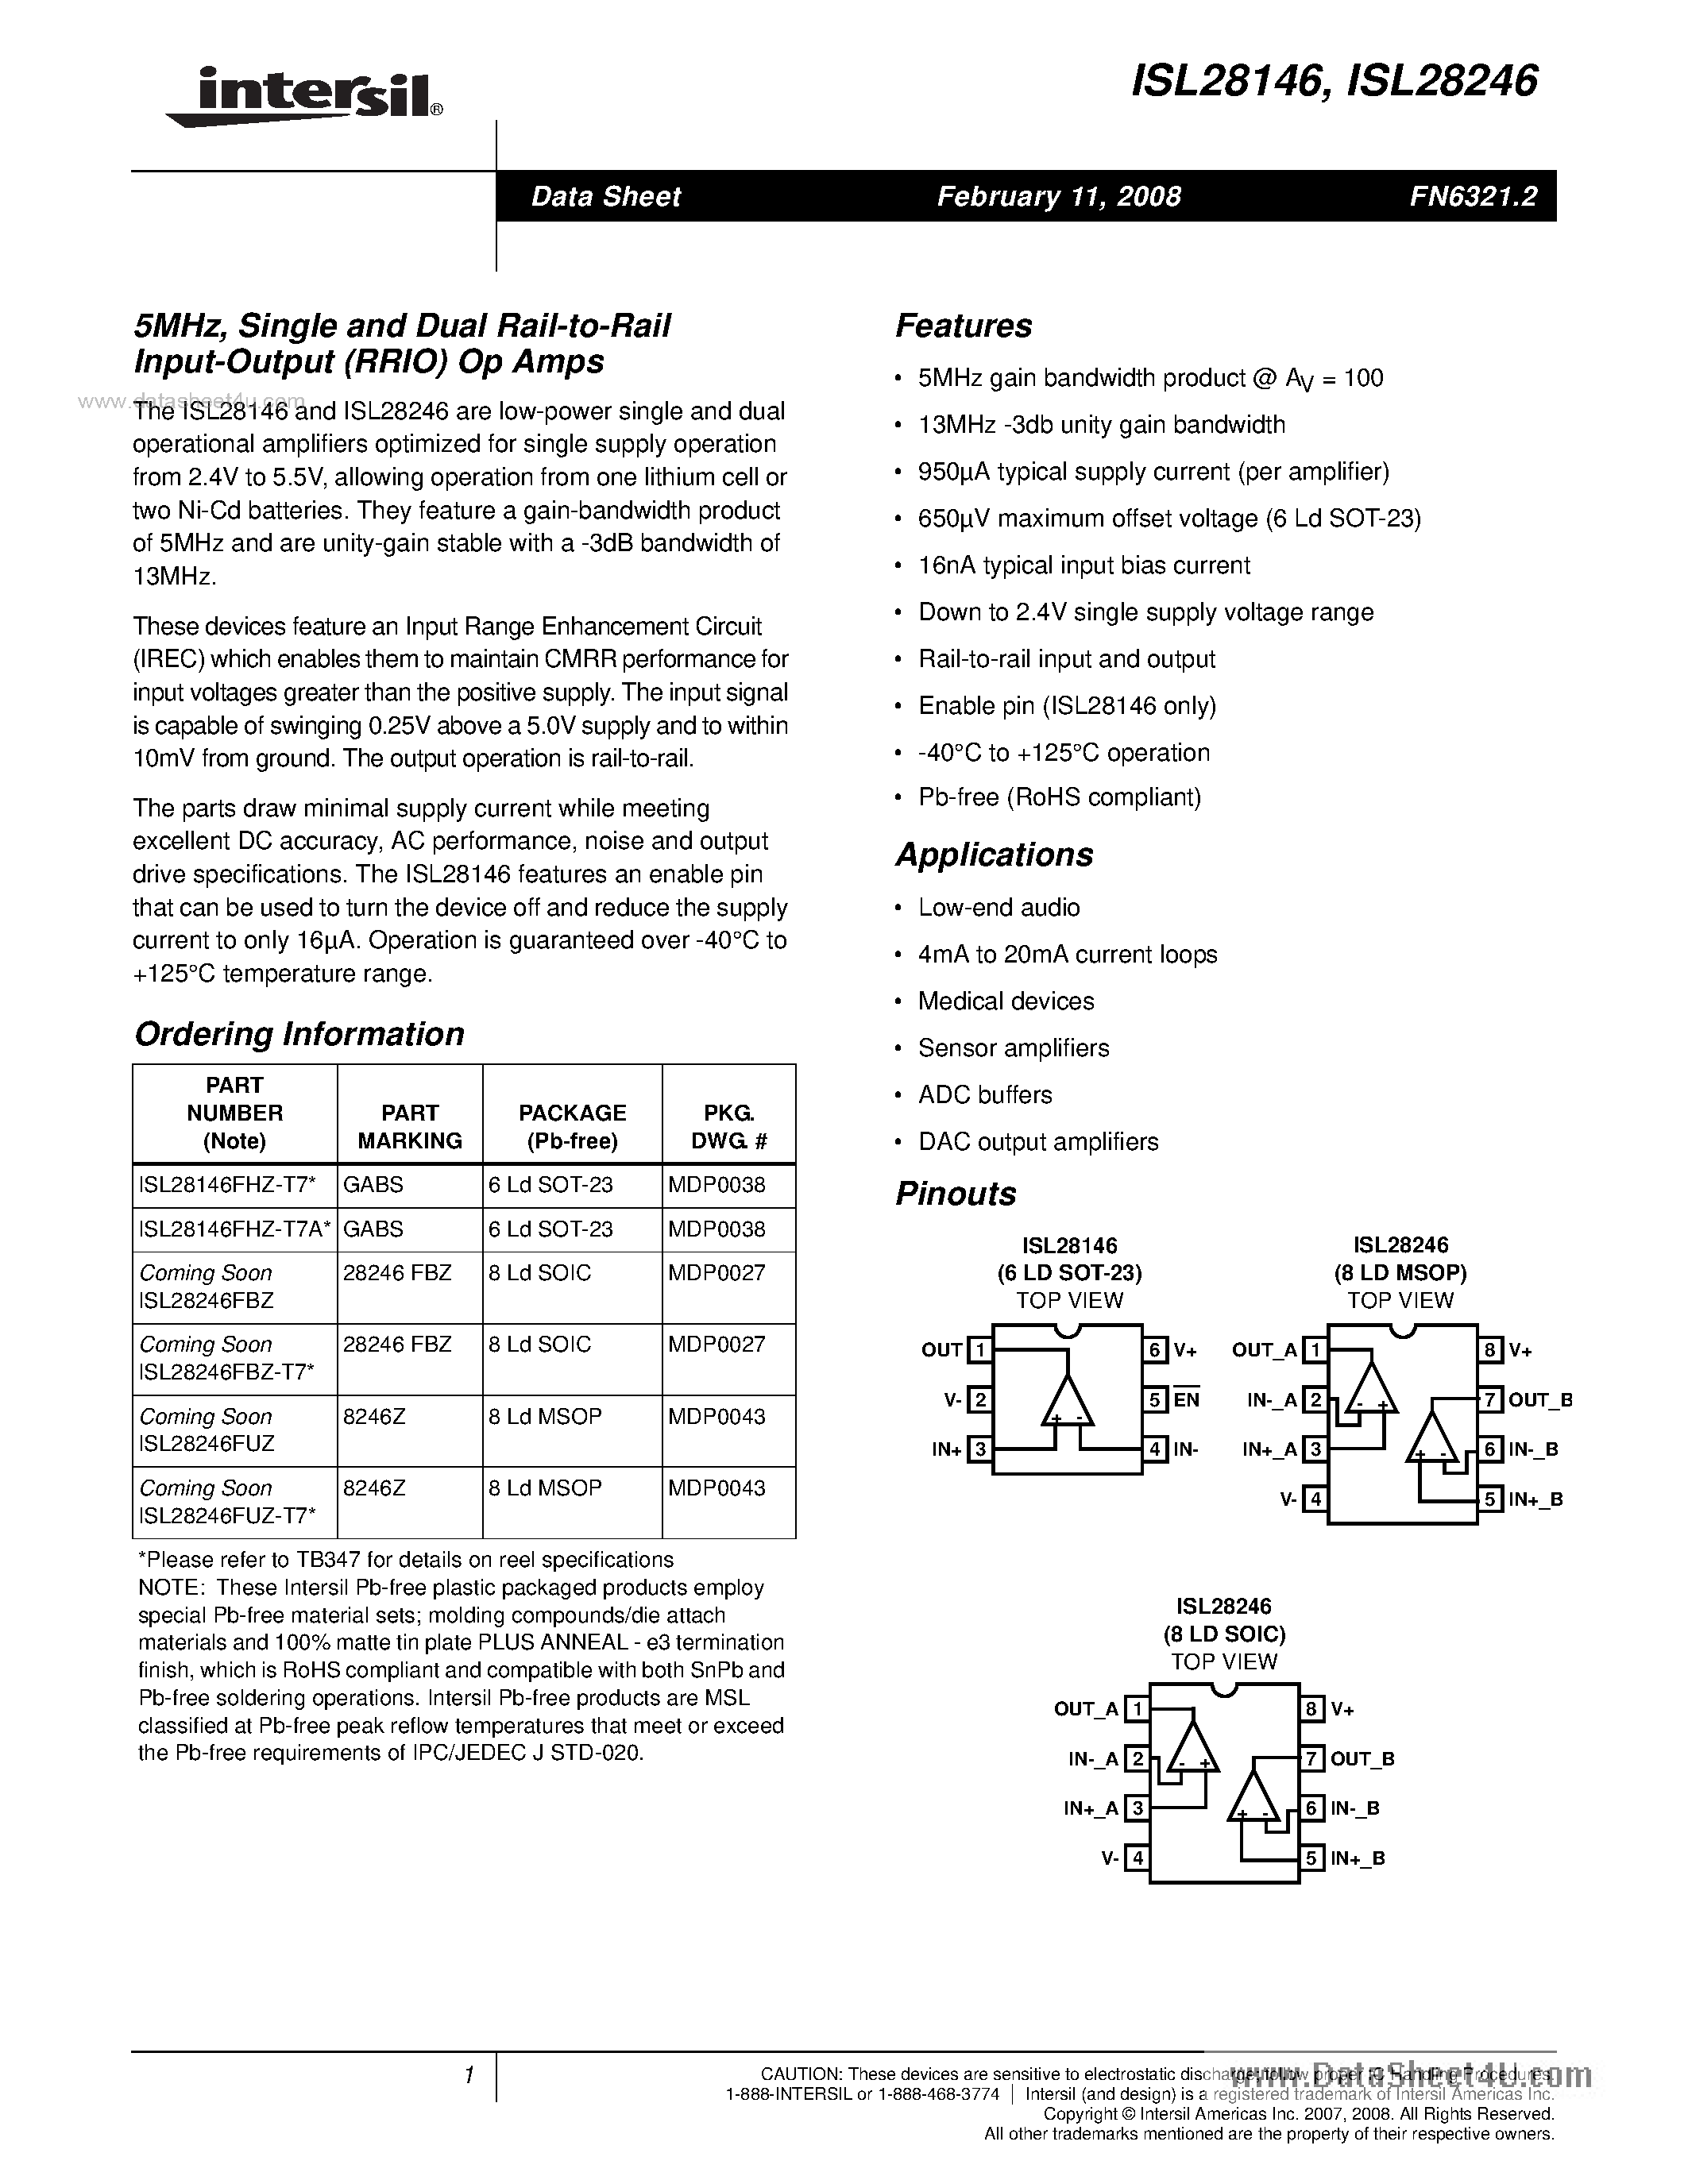 Datasheet ISL28246 - (ISL28146 / ISL28246) Single and Dual Rail-to-Rail Input-Output (RRIO) Op Amps page 1